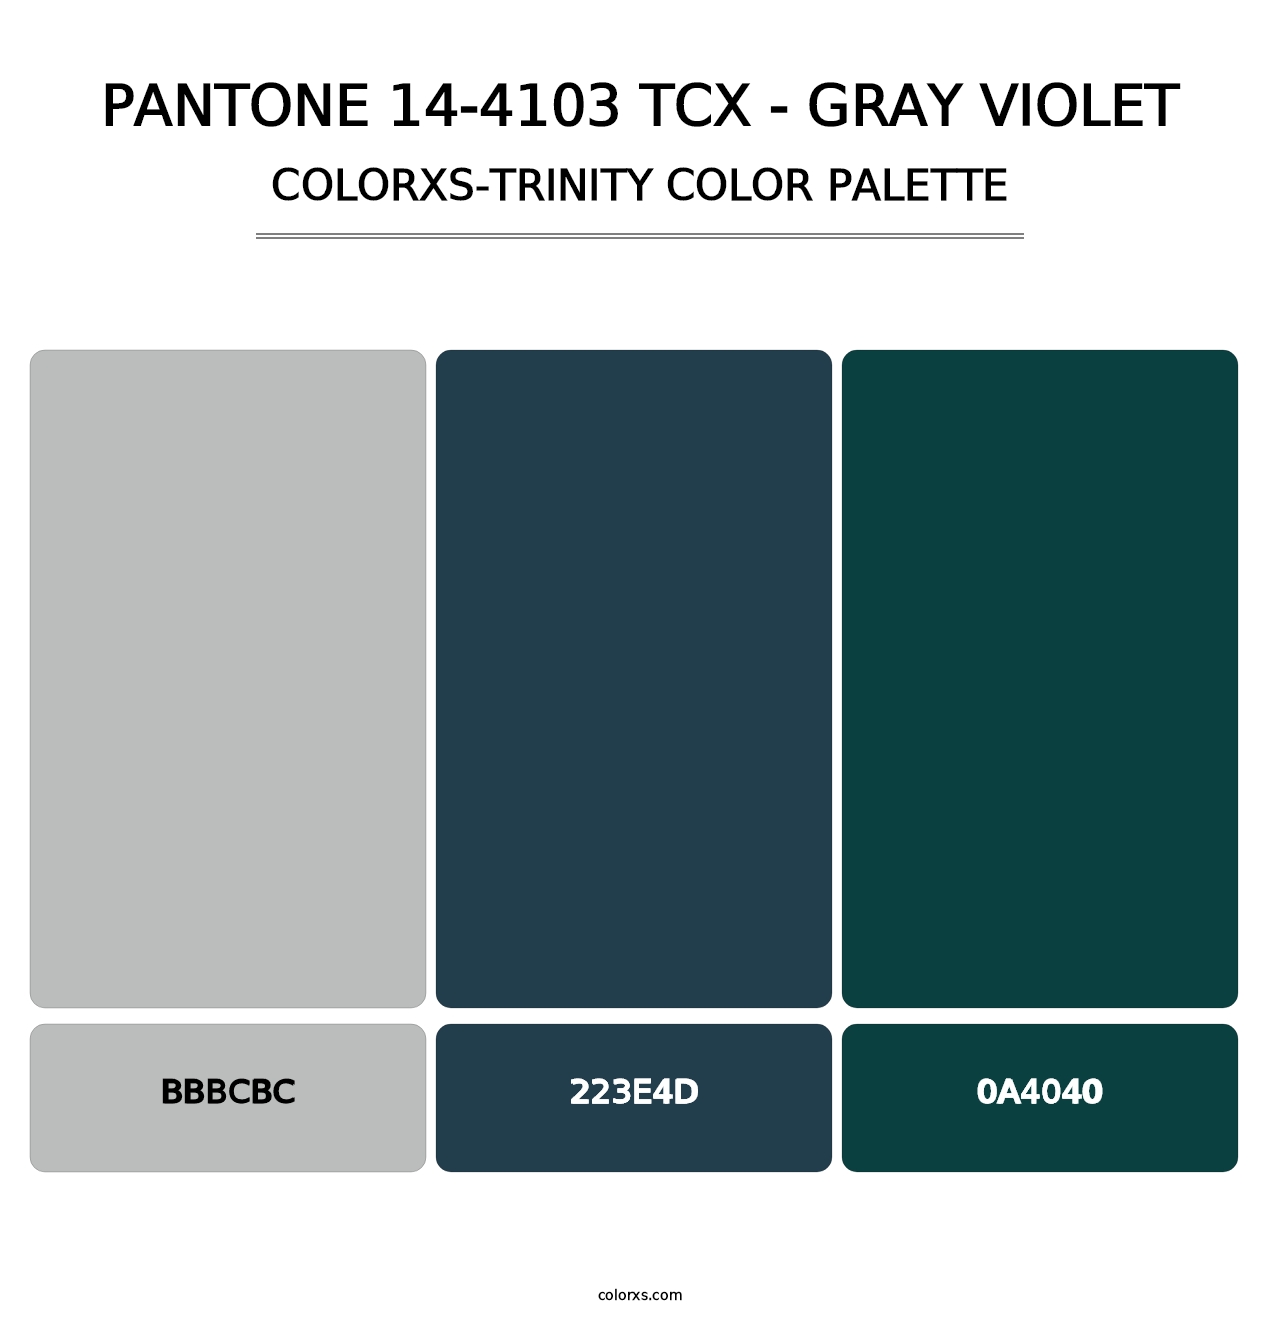 PANTONE 14-4103 TCX - Gray Violet - Colorxs Trinity Palette